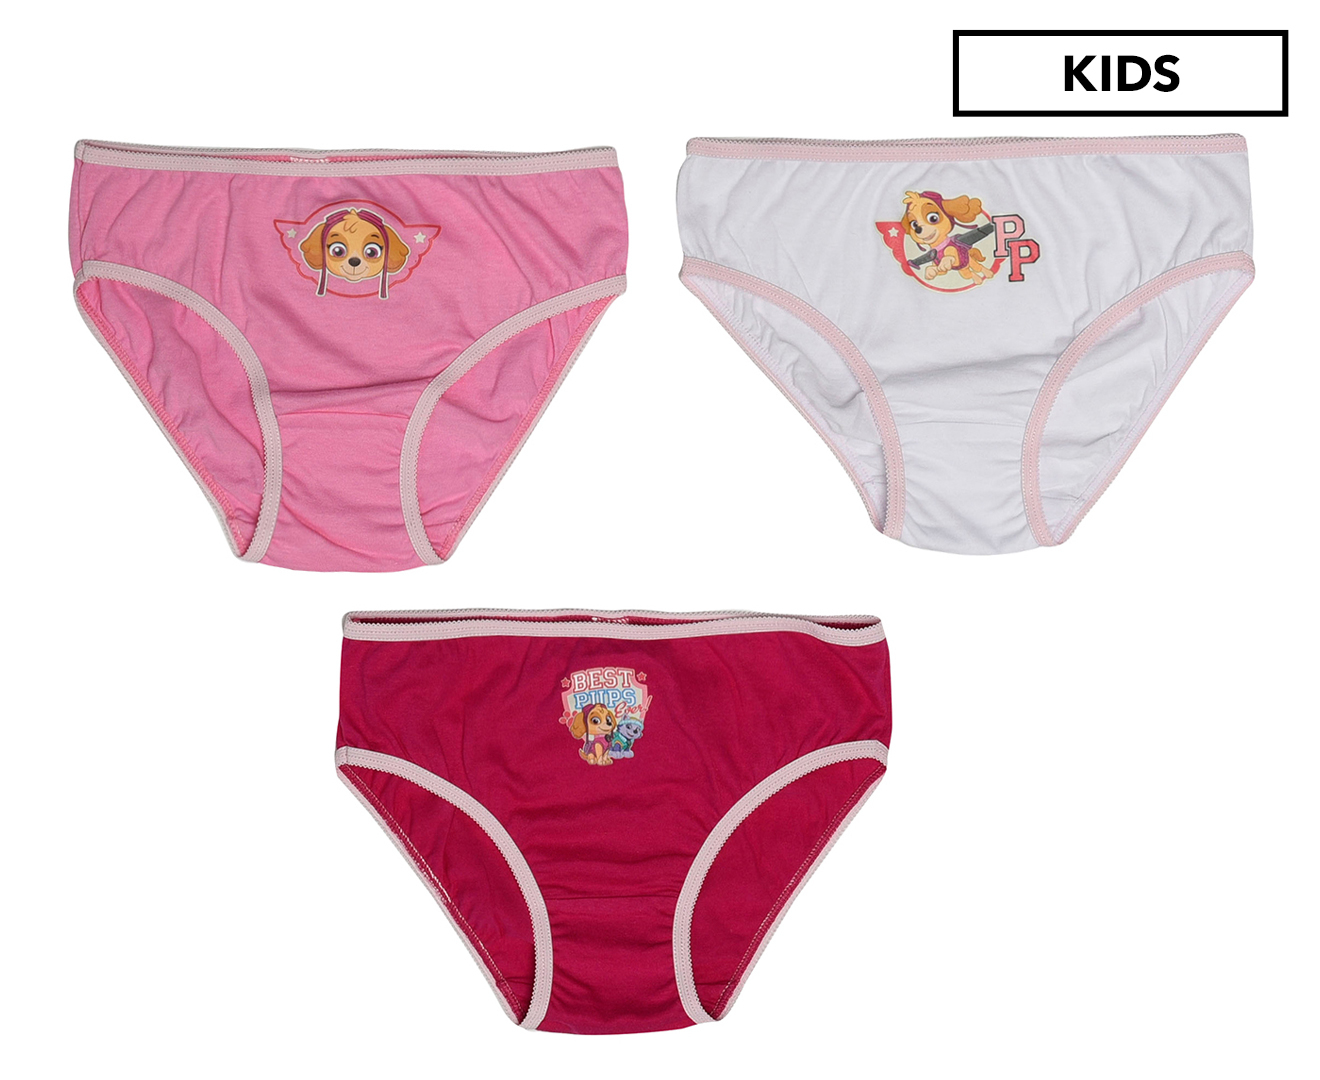 Paw Patrol Girls Underwear 3pk - Multi